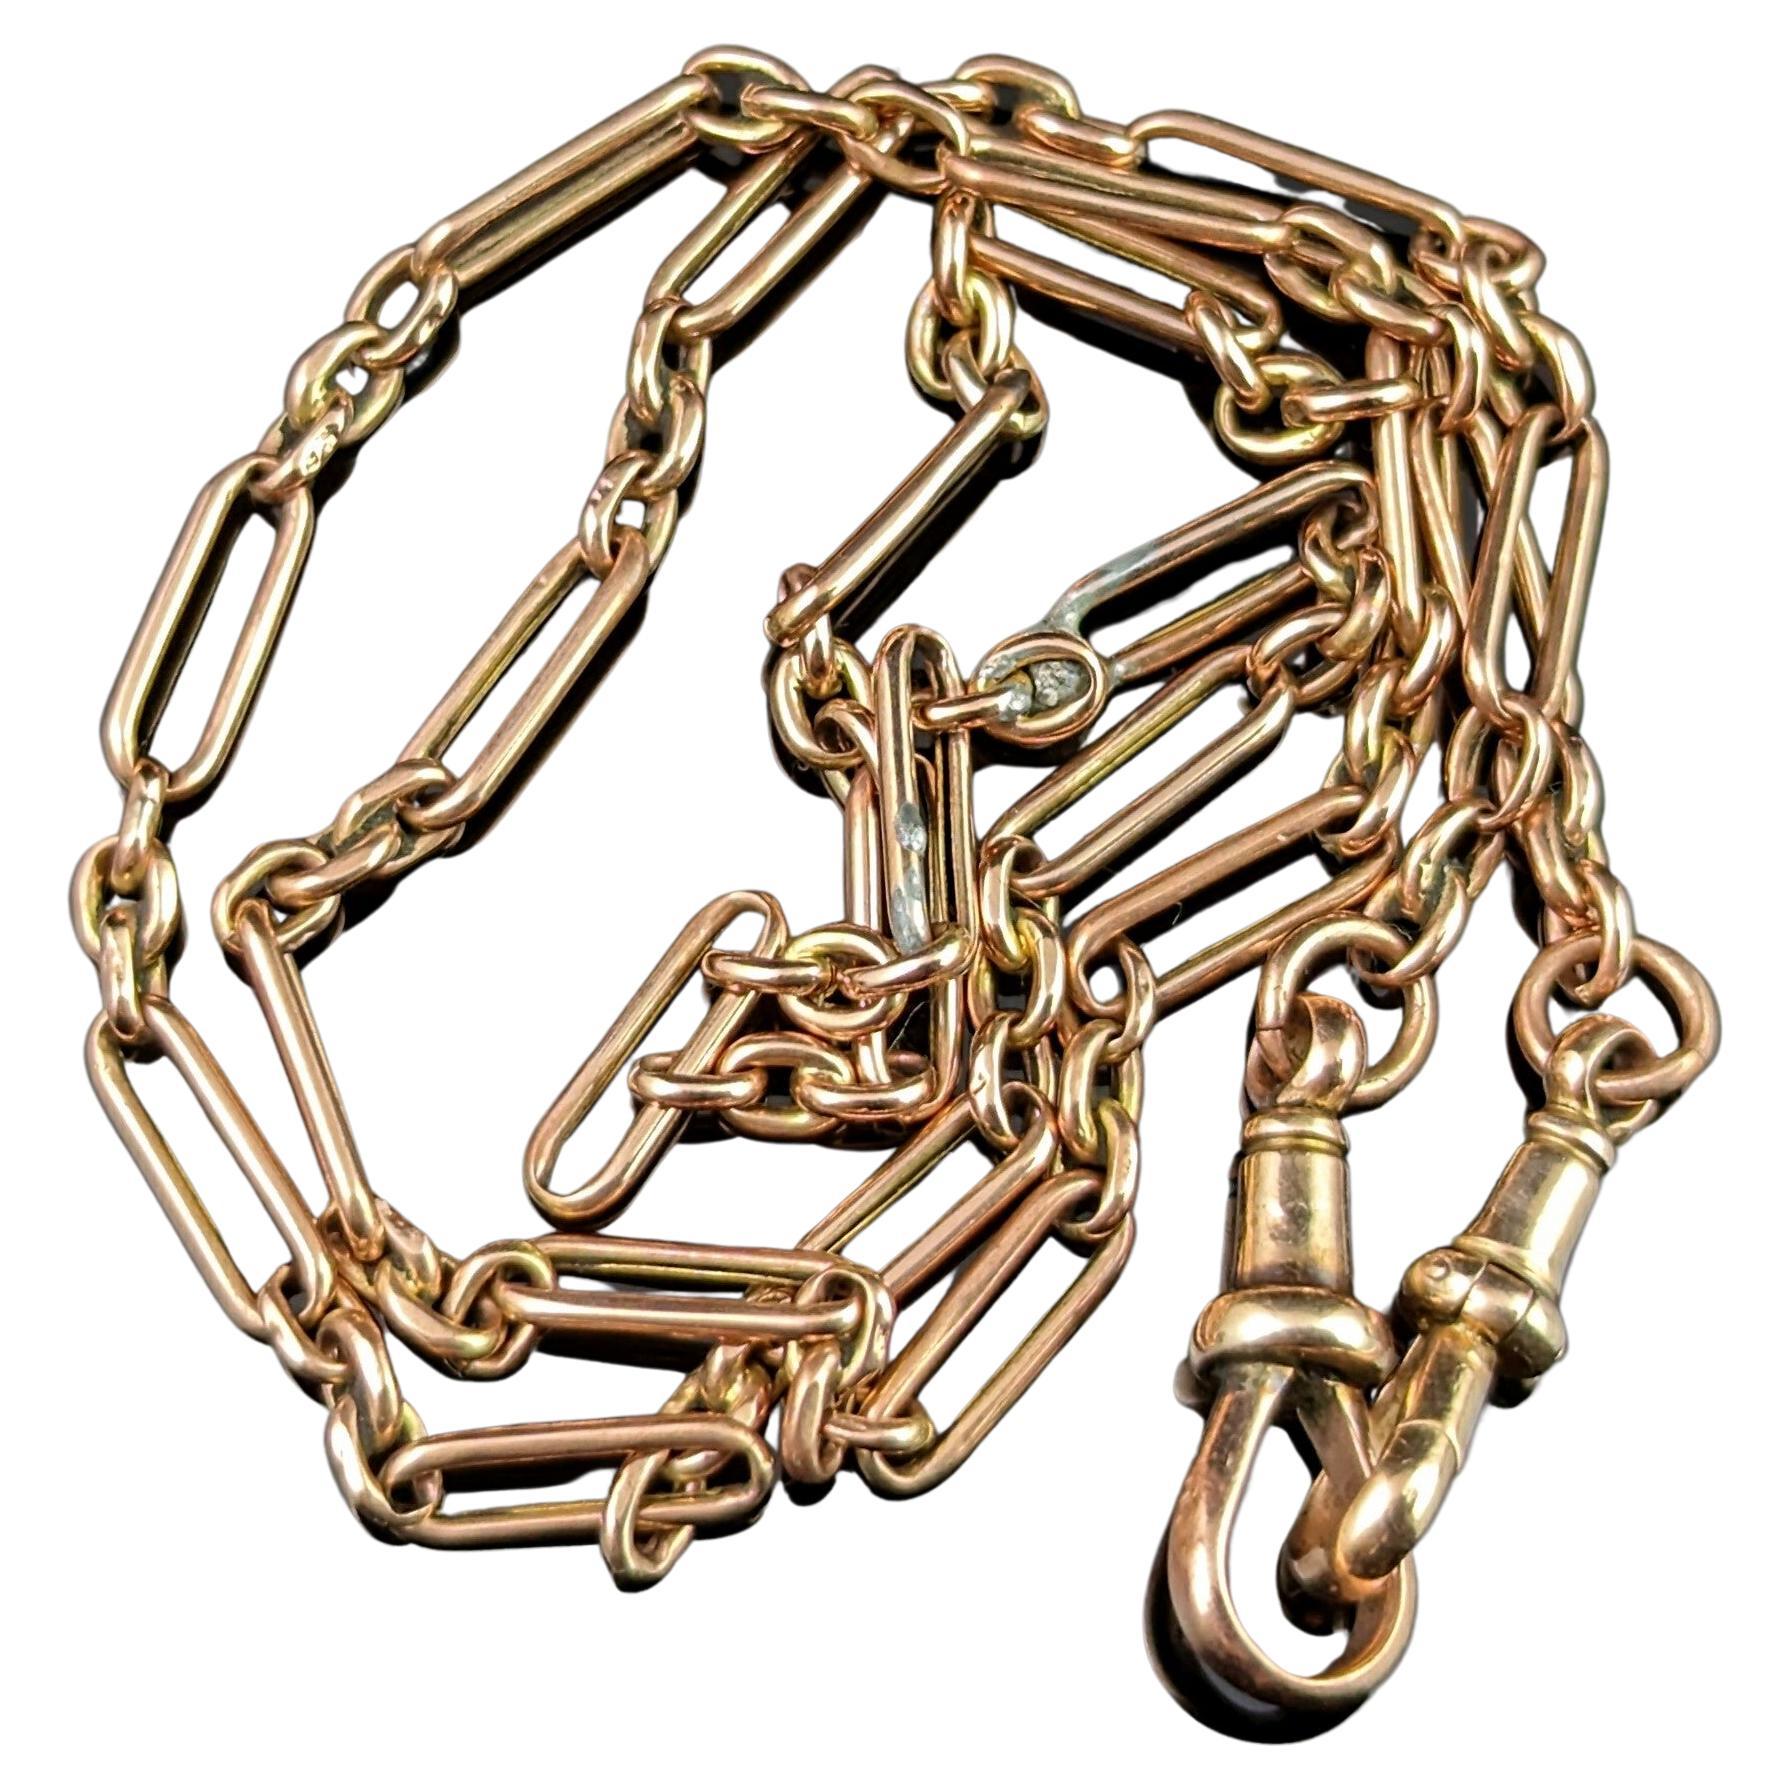 Antique 9k Rose Gold Albert Chain, Necklace, Trombone Link